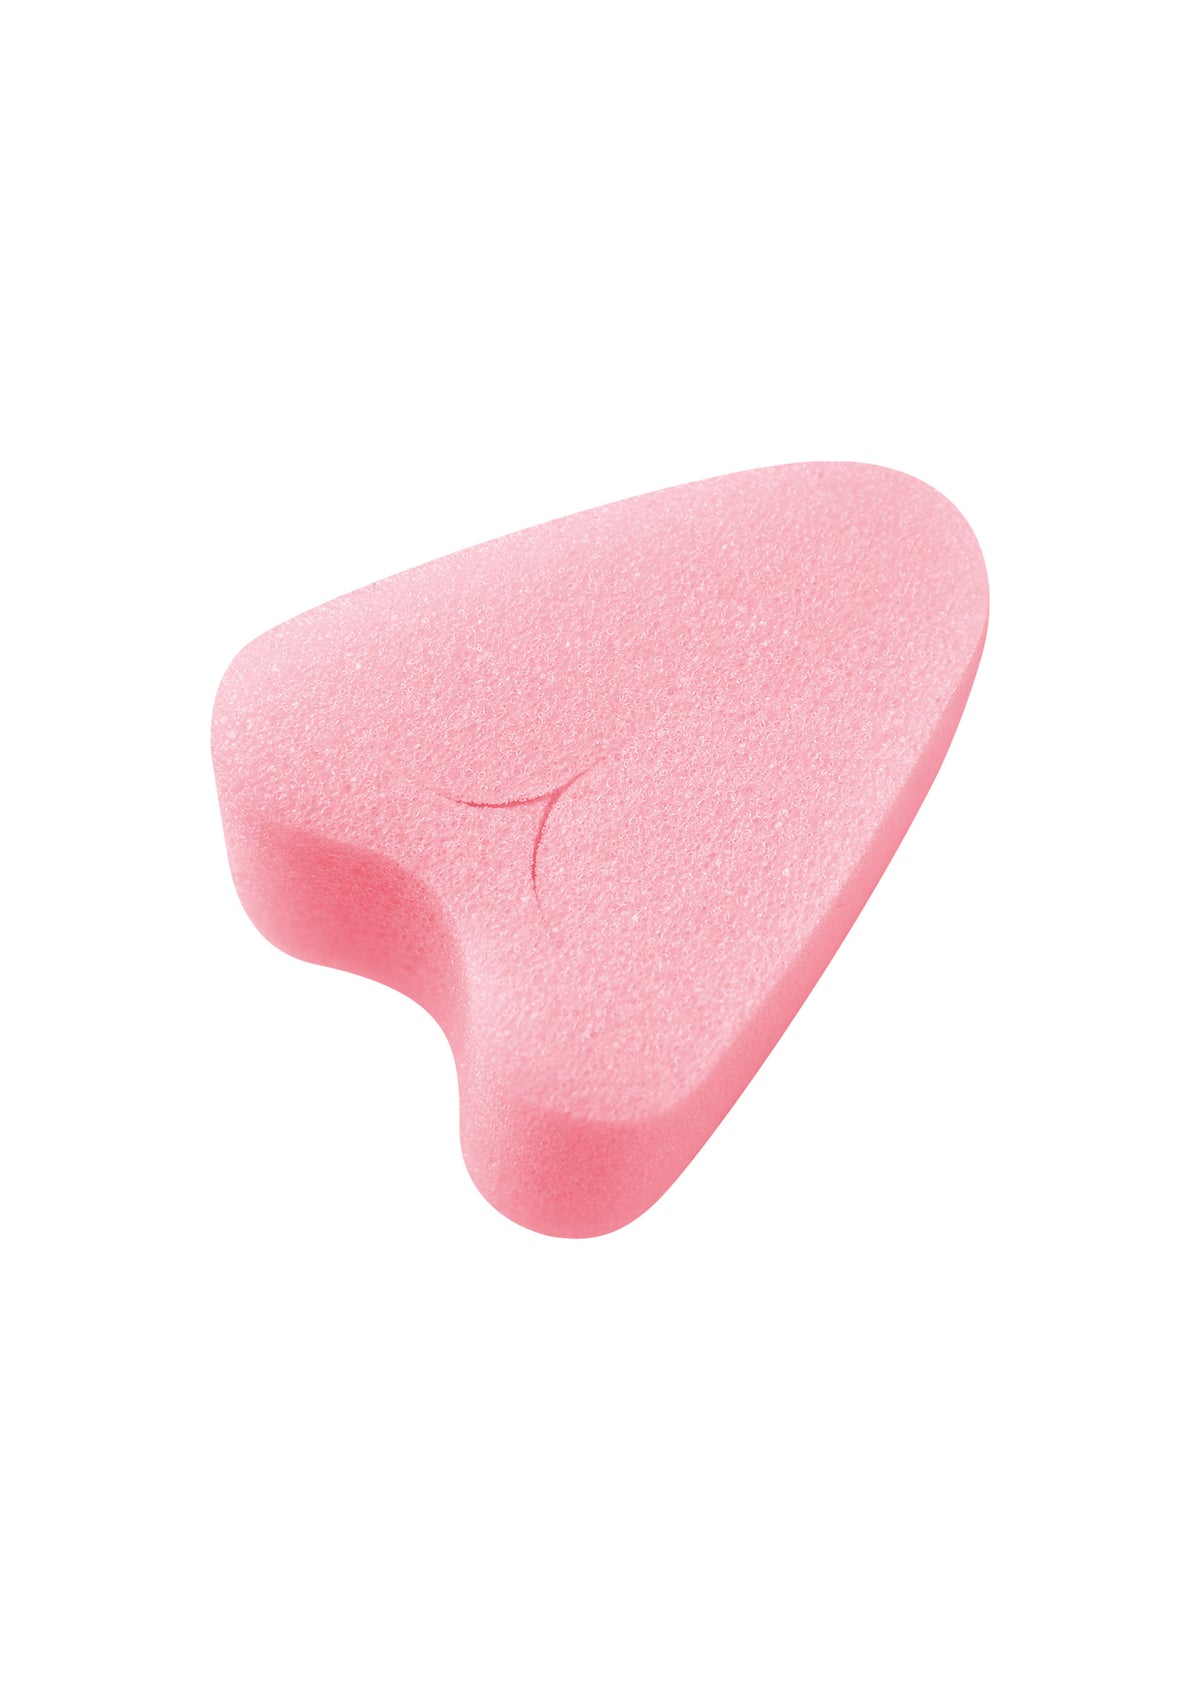 Soft Tampons Mini Box of 50-erotic-world-munchen.myshopify.com